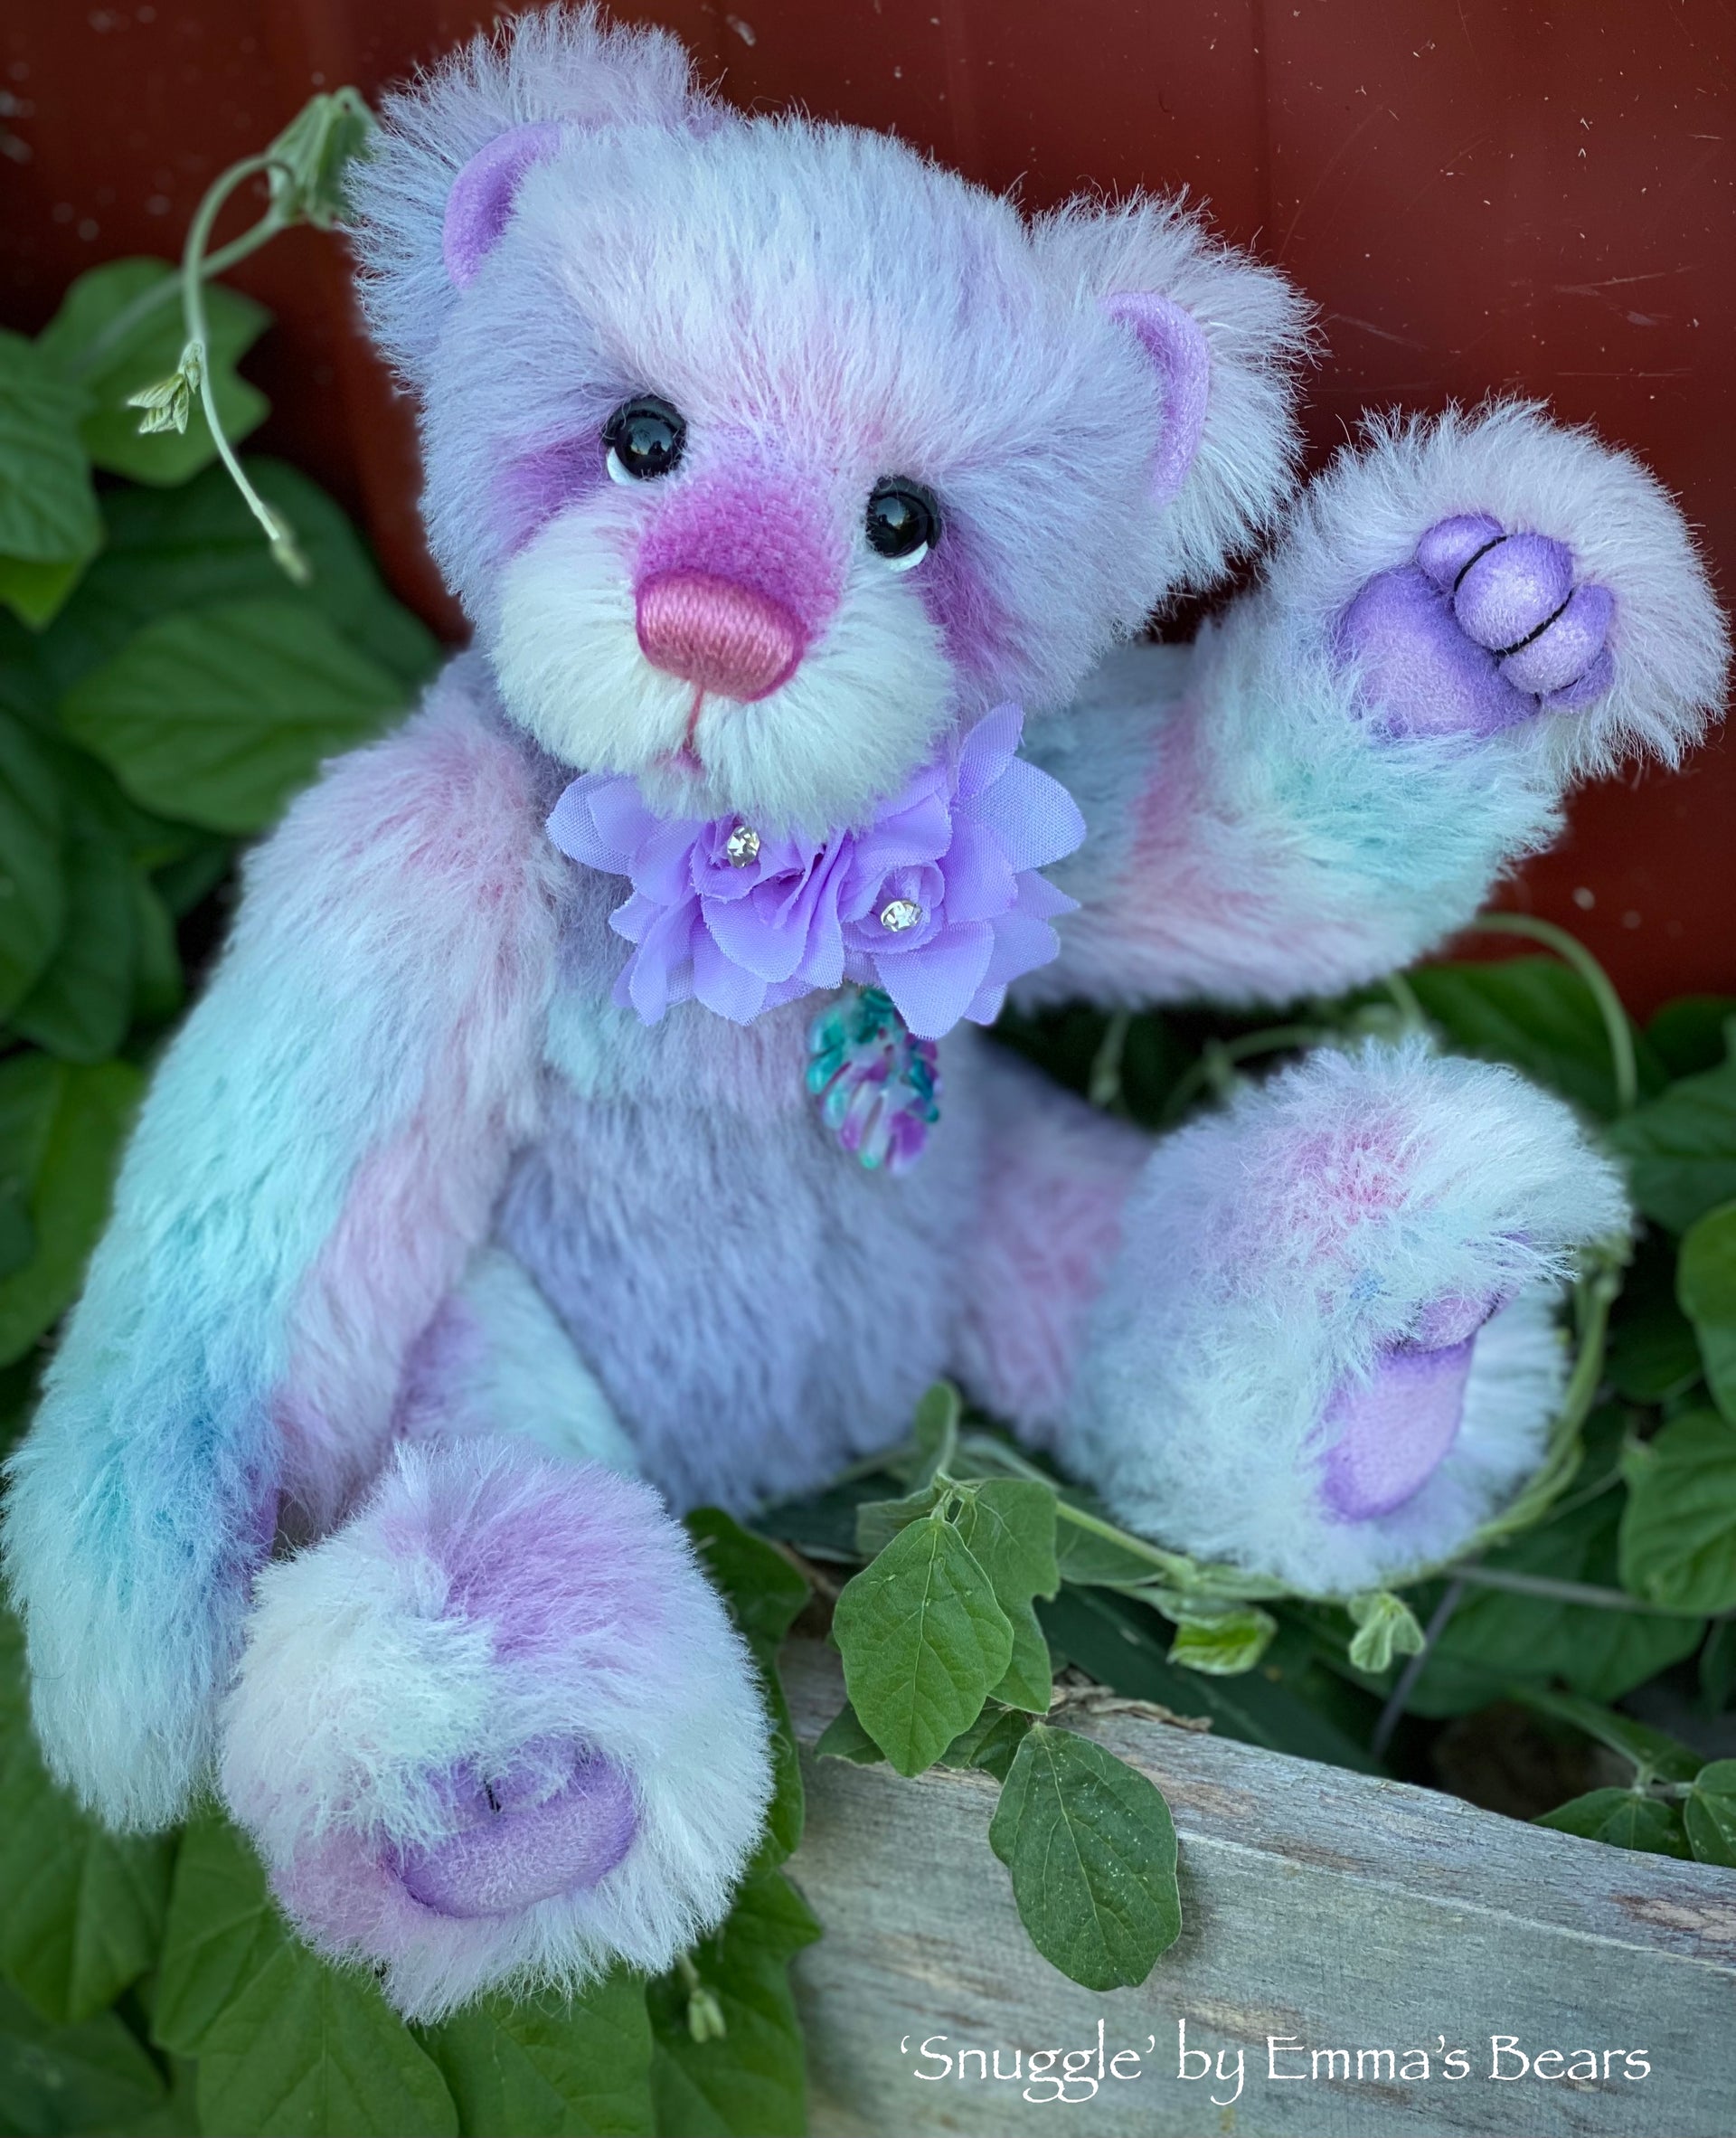 Snuggle - 10" Hand-Dyed alpaca artist bear by Emma's Bears - OOAK